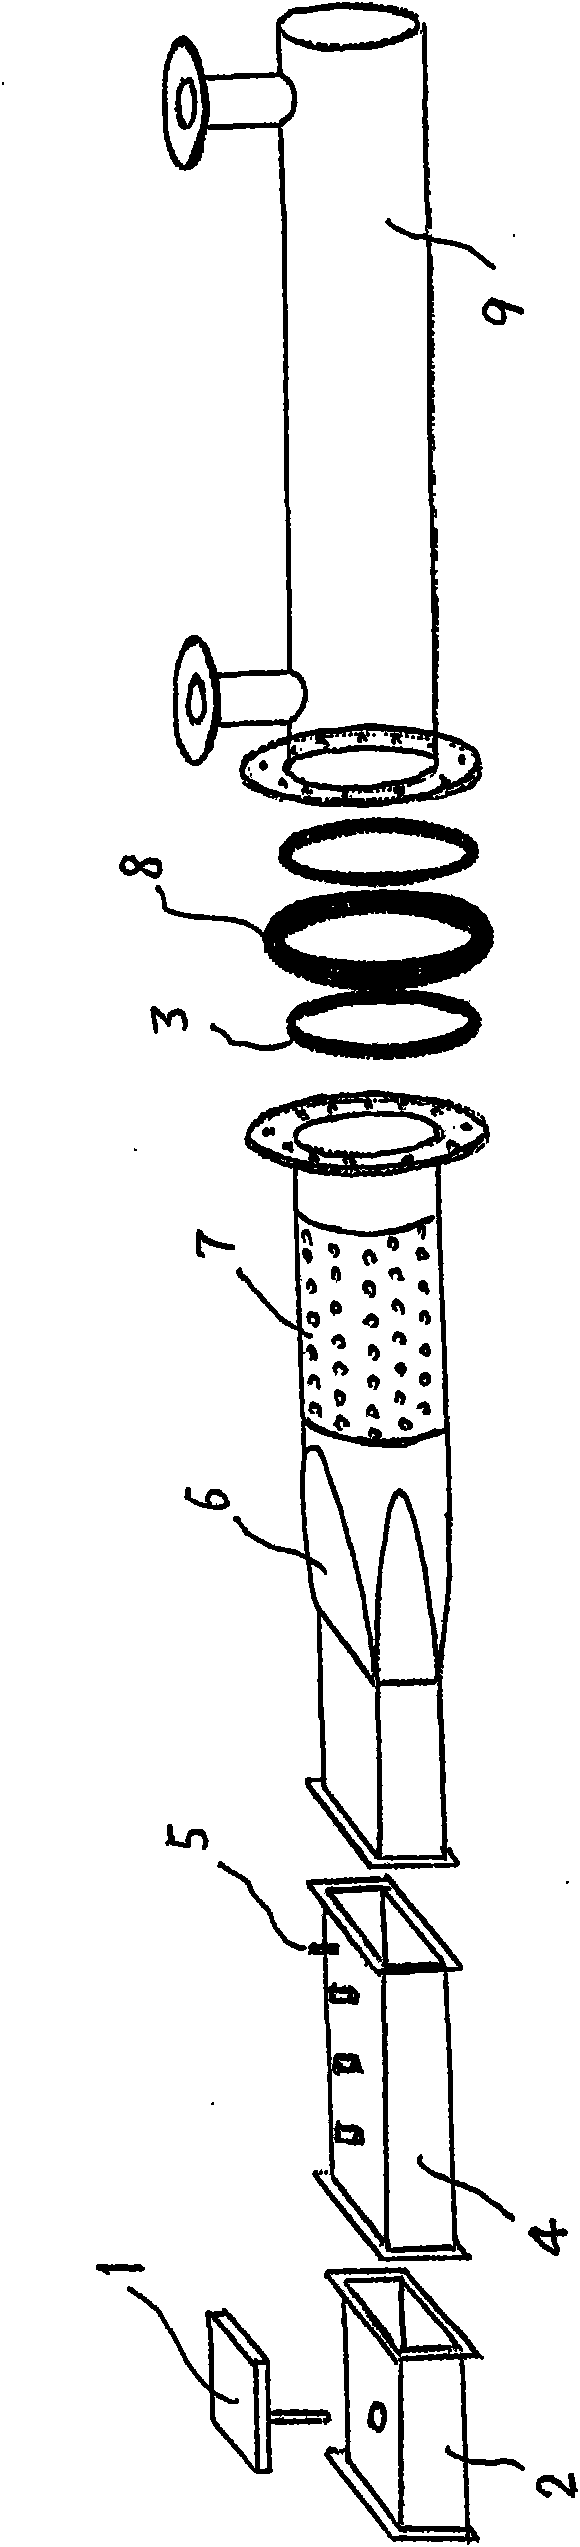 Liquefied petroleum gas or gasoline desulphurization microwave reaction kettle